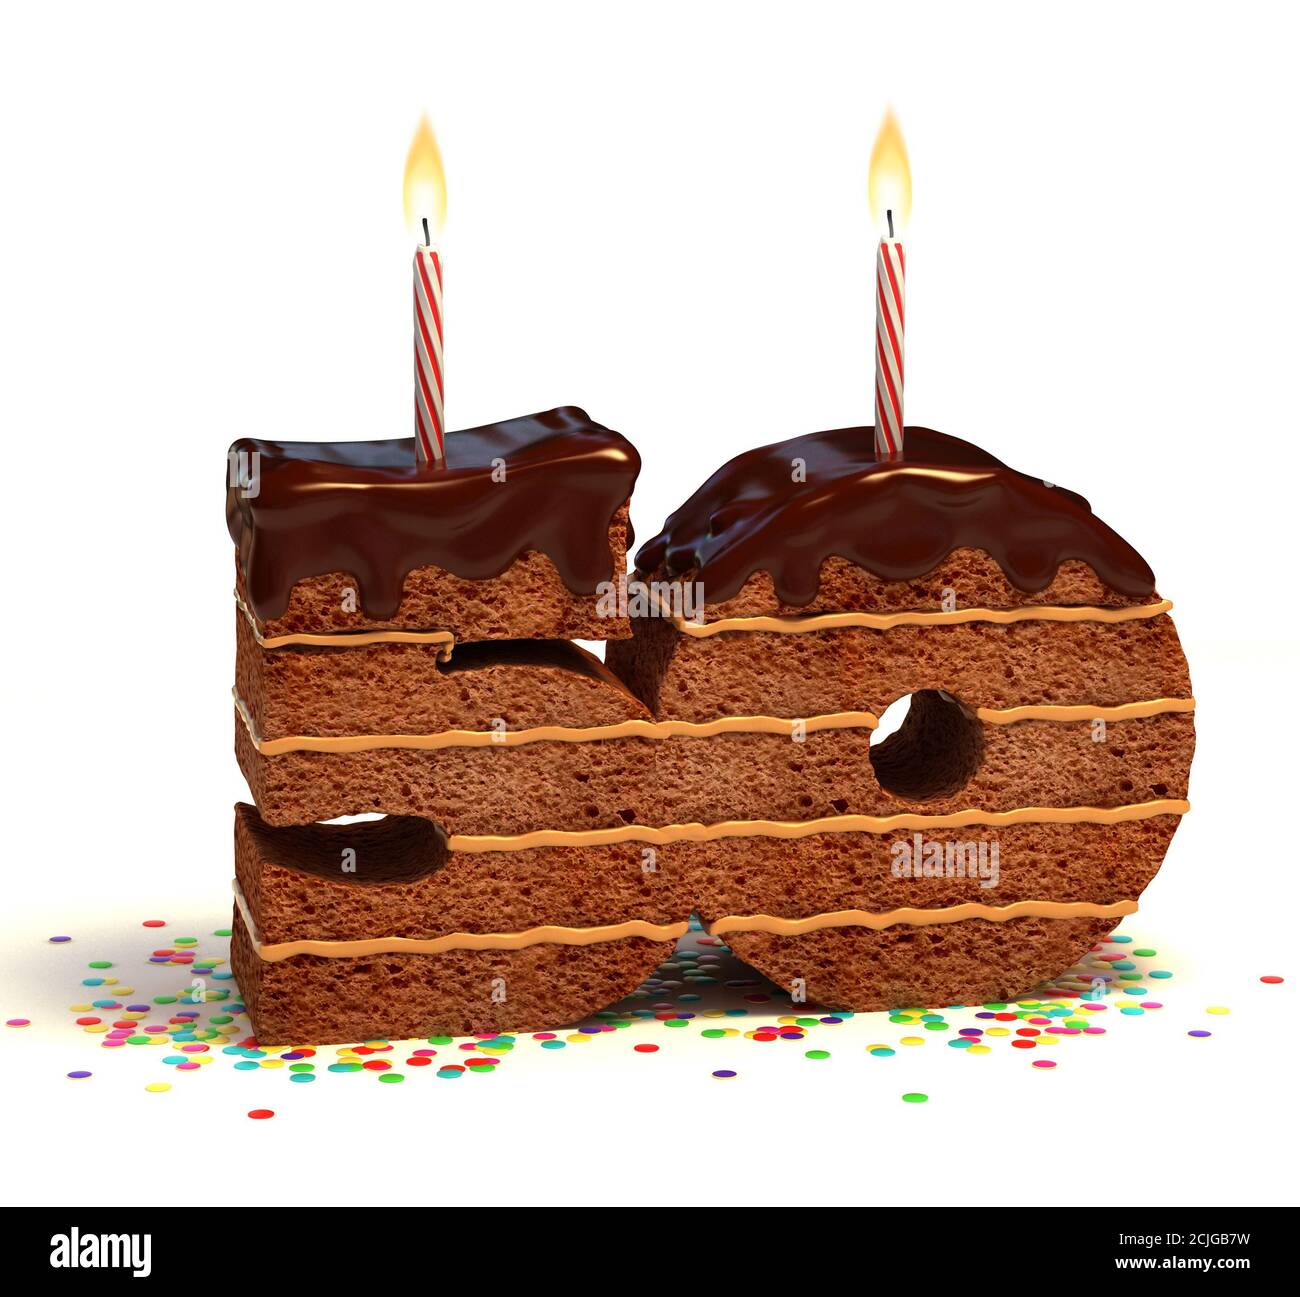 Velas de chocolate para cumpleaños - Nº50